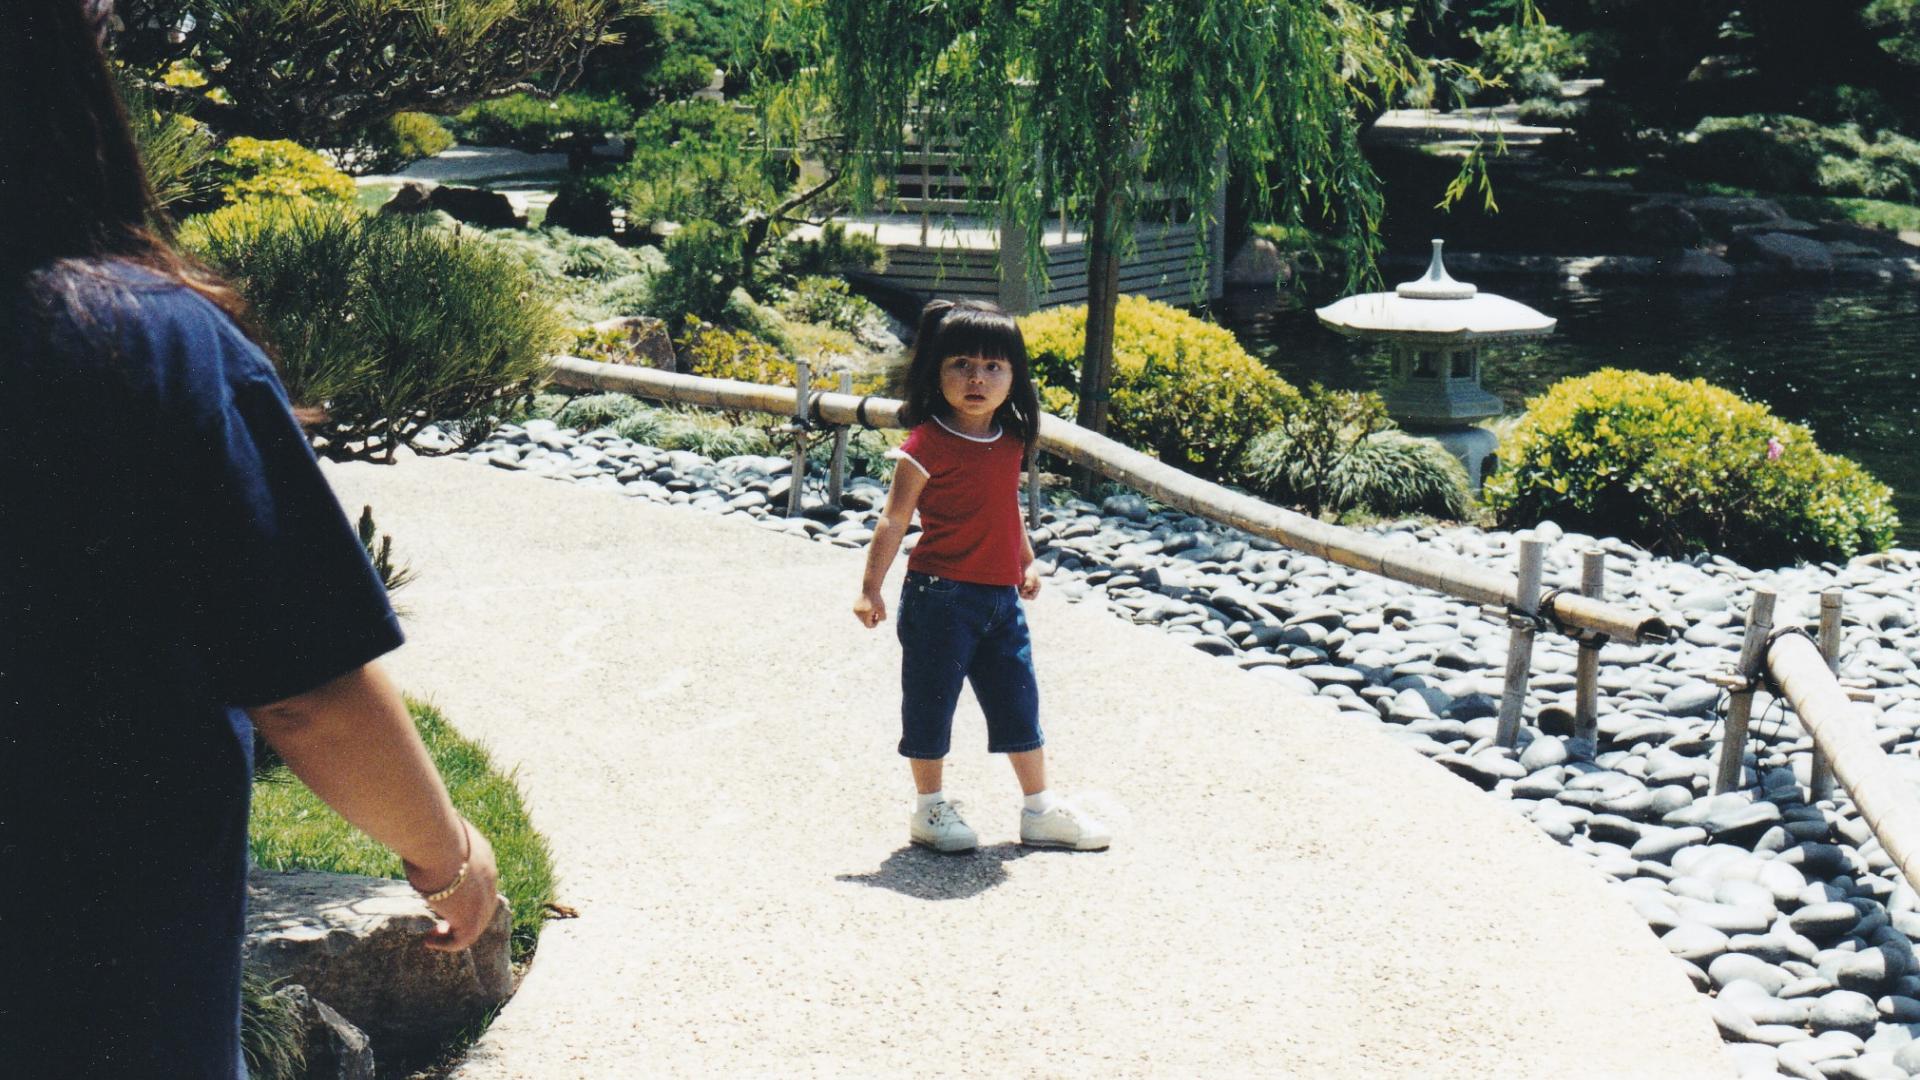 Natali at the Japanese Garden